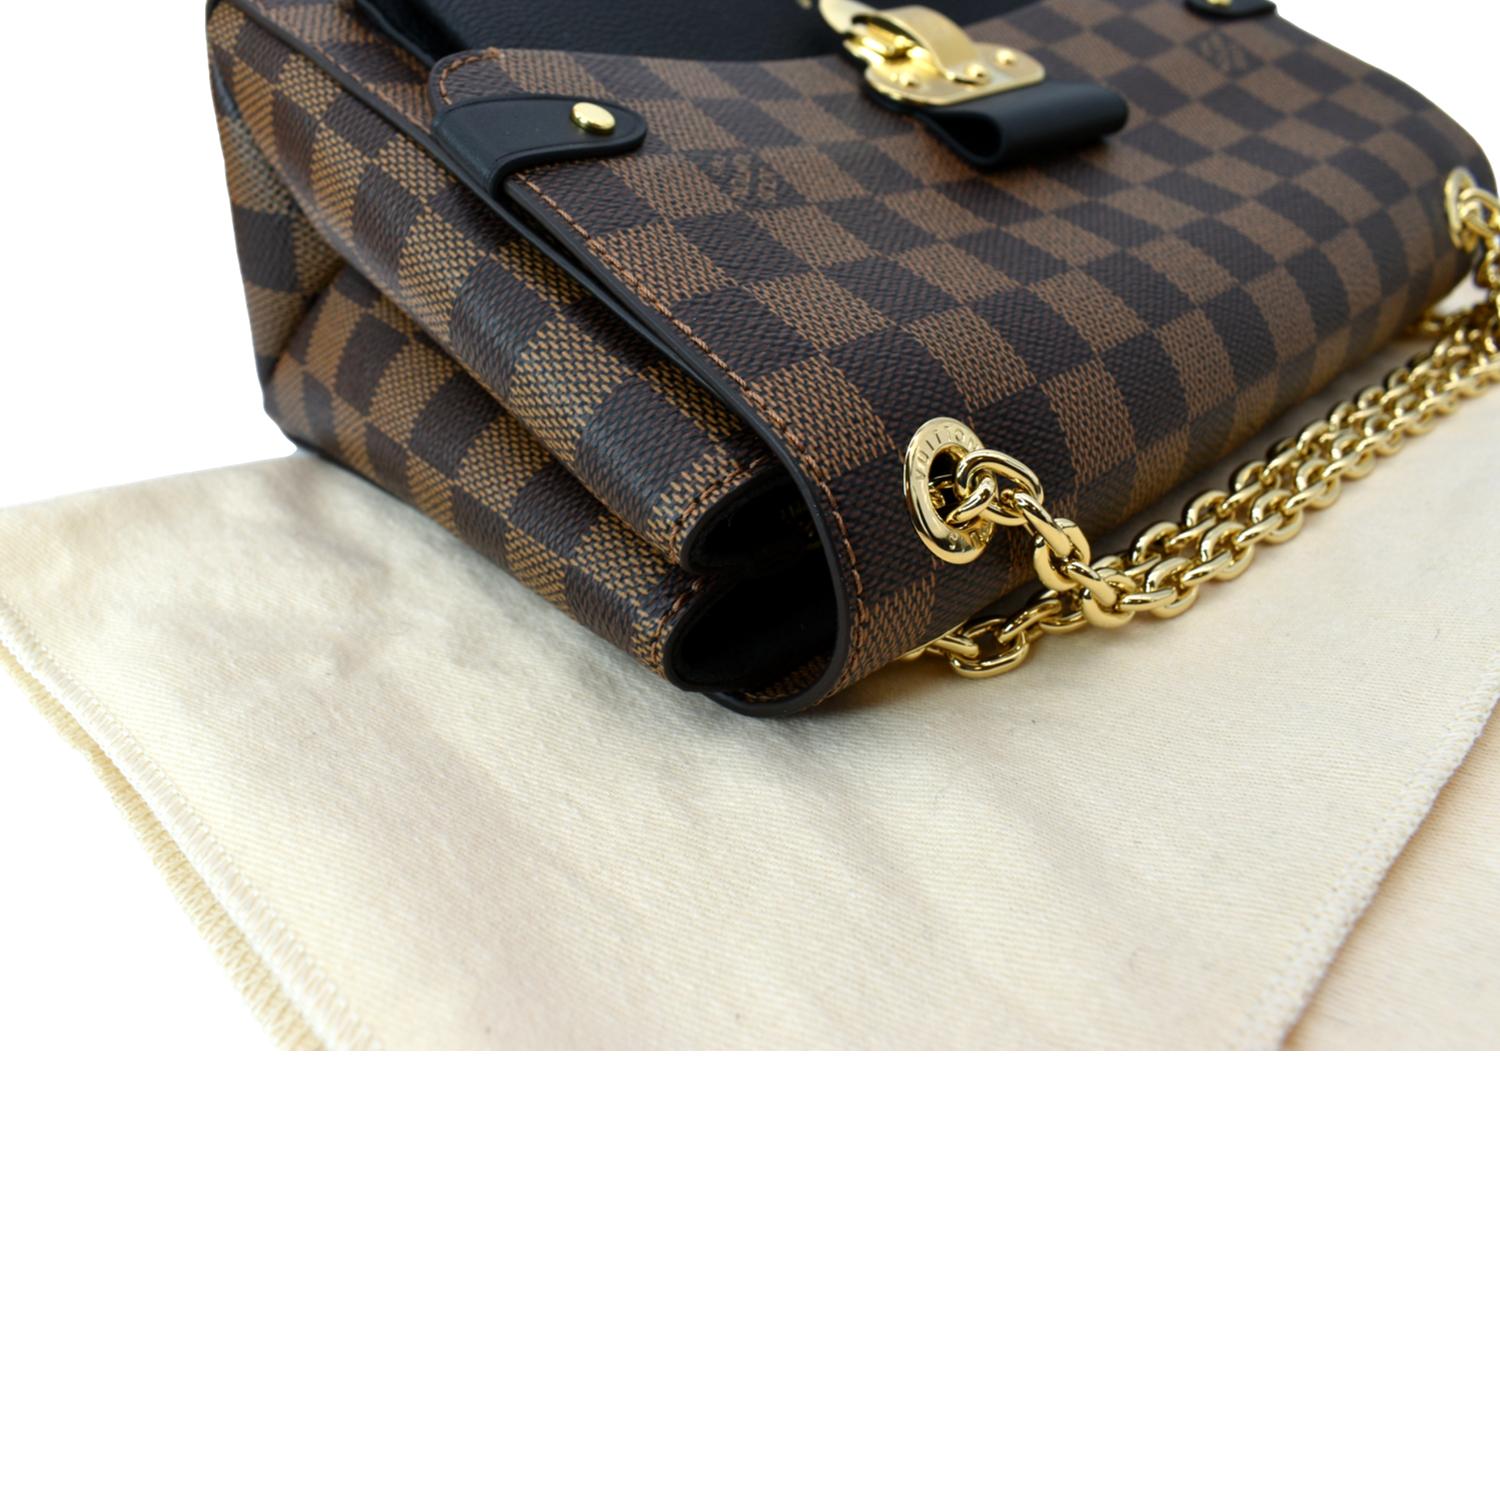 Louis Vuitton Vavin Pm Bag  Bags, Louis vuitton bag, Vuitton bag